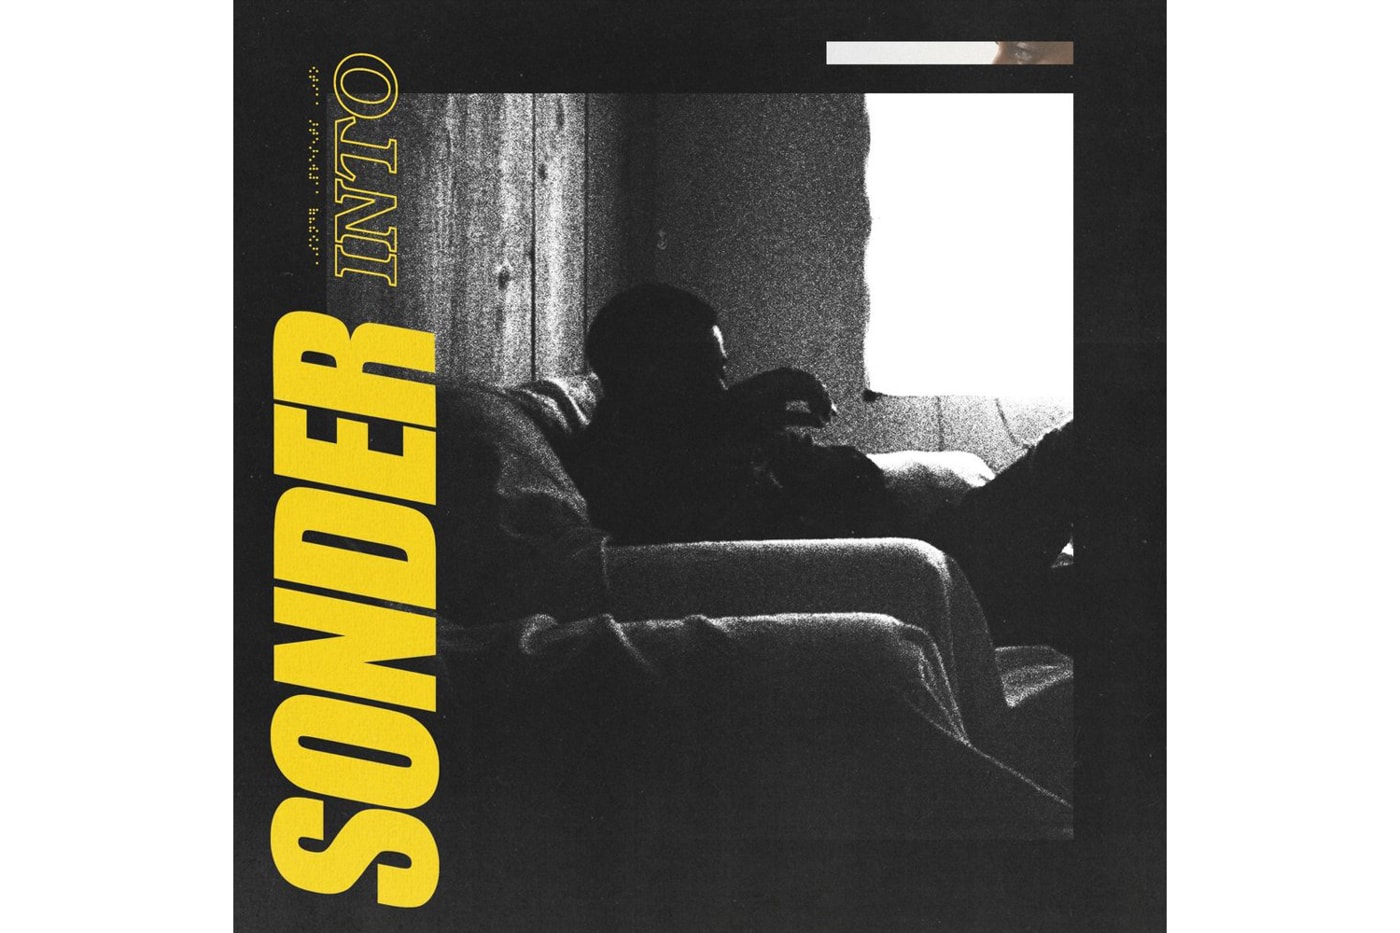 Sonder Into EP Release